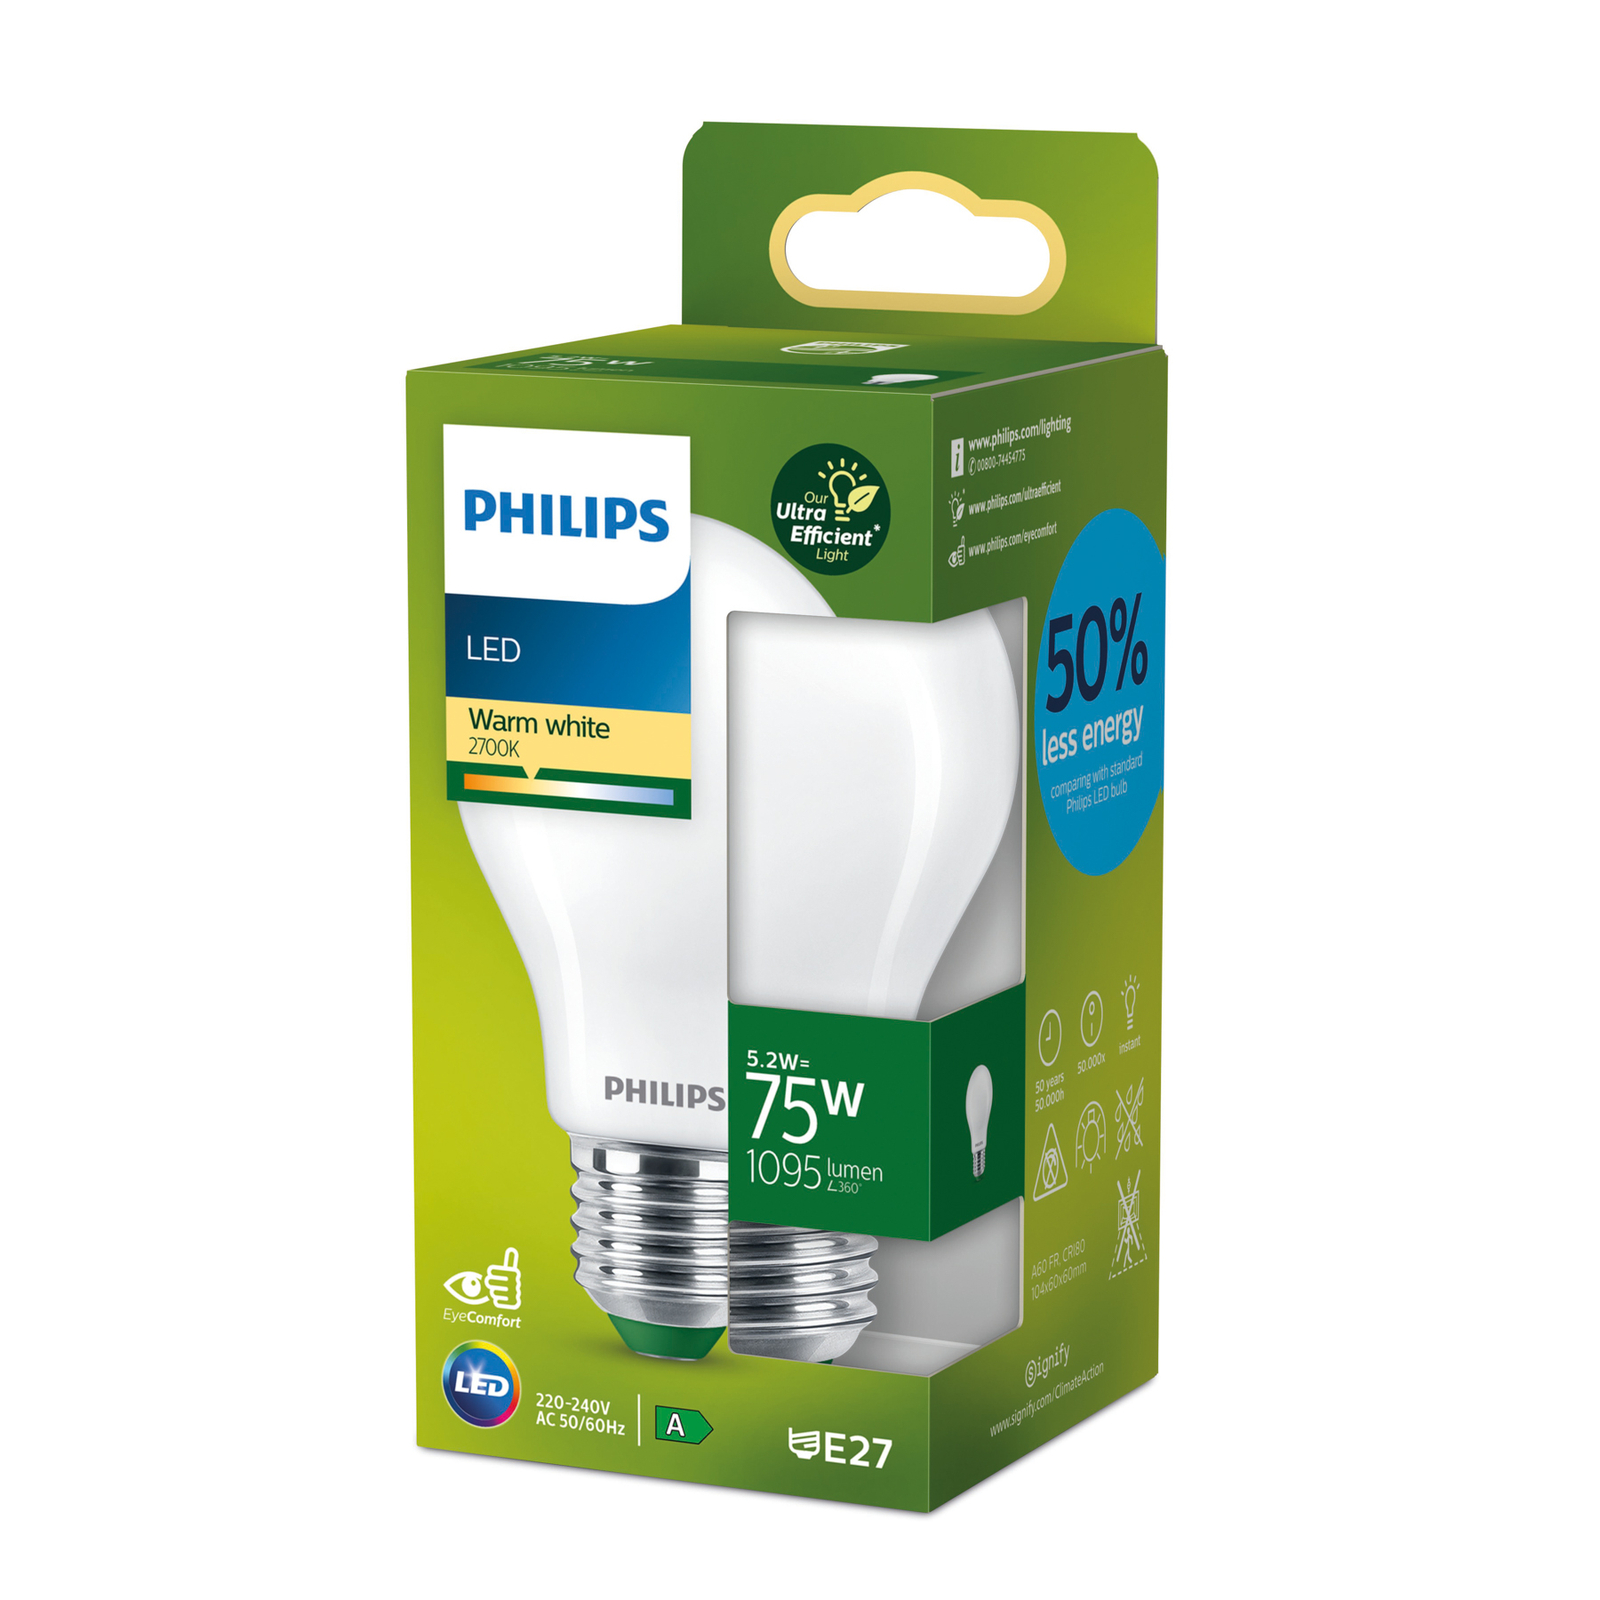 Philips E27 LED svjetiljka A60 5,2W 1095lm 2700K mat